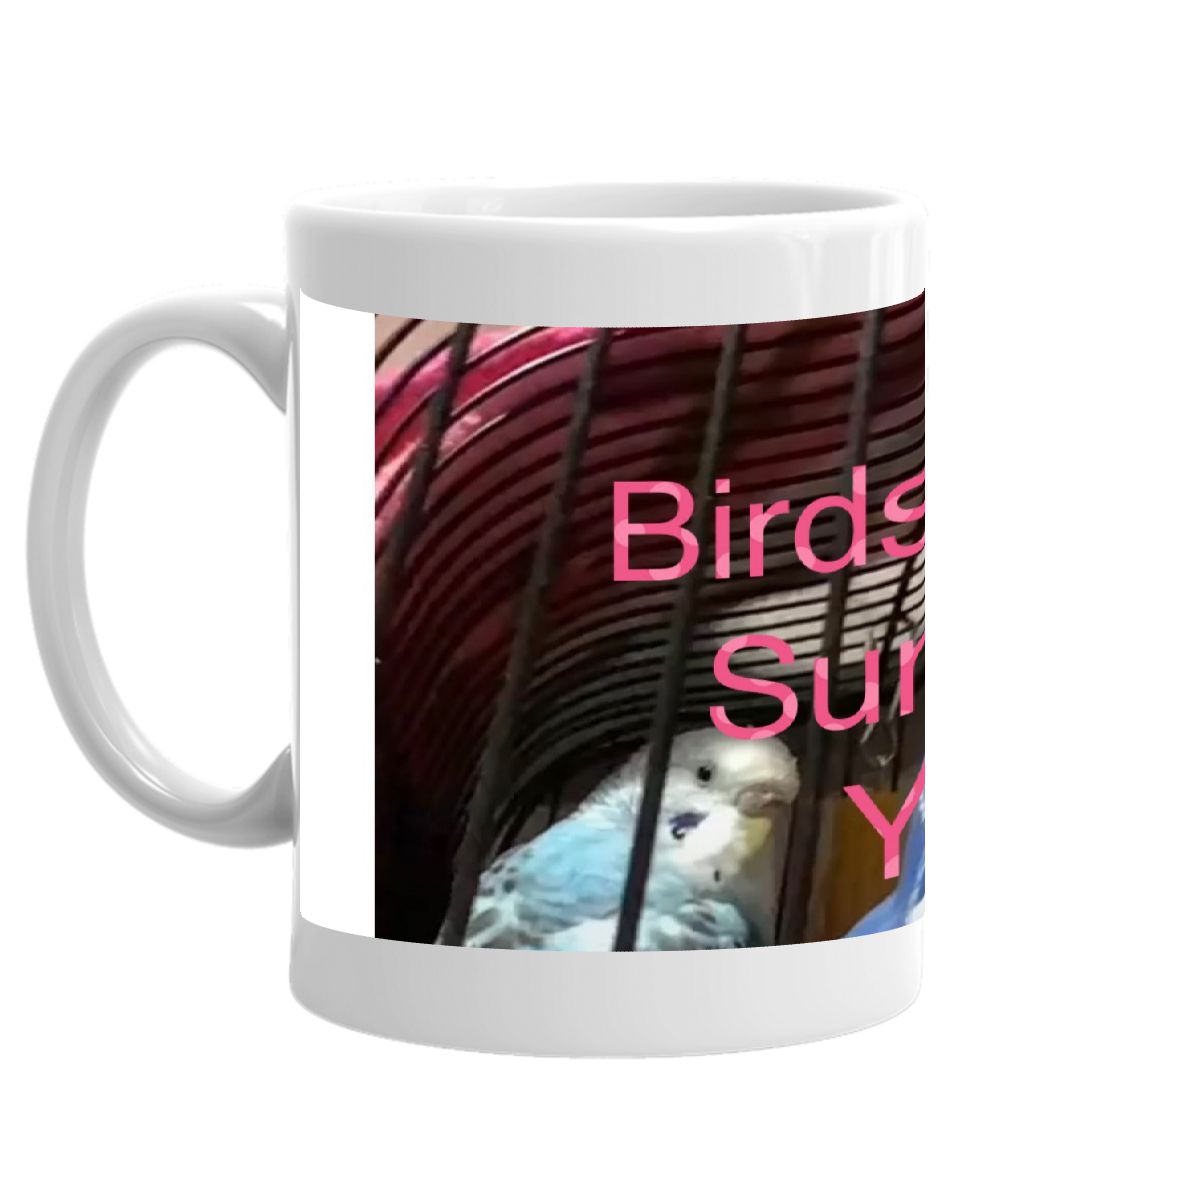 Birds Maria and sunshine mug